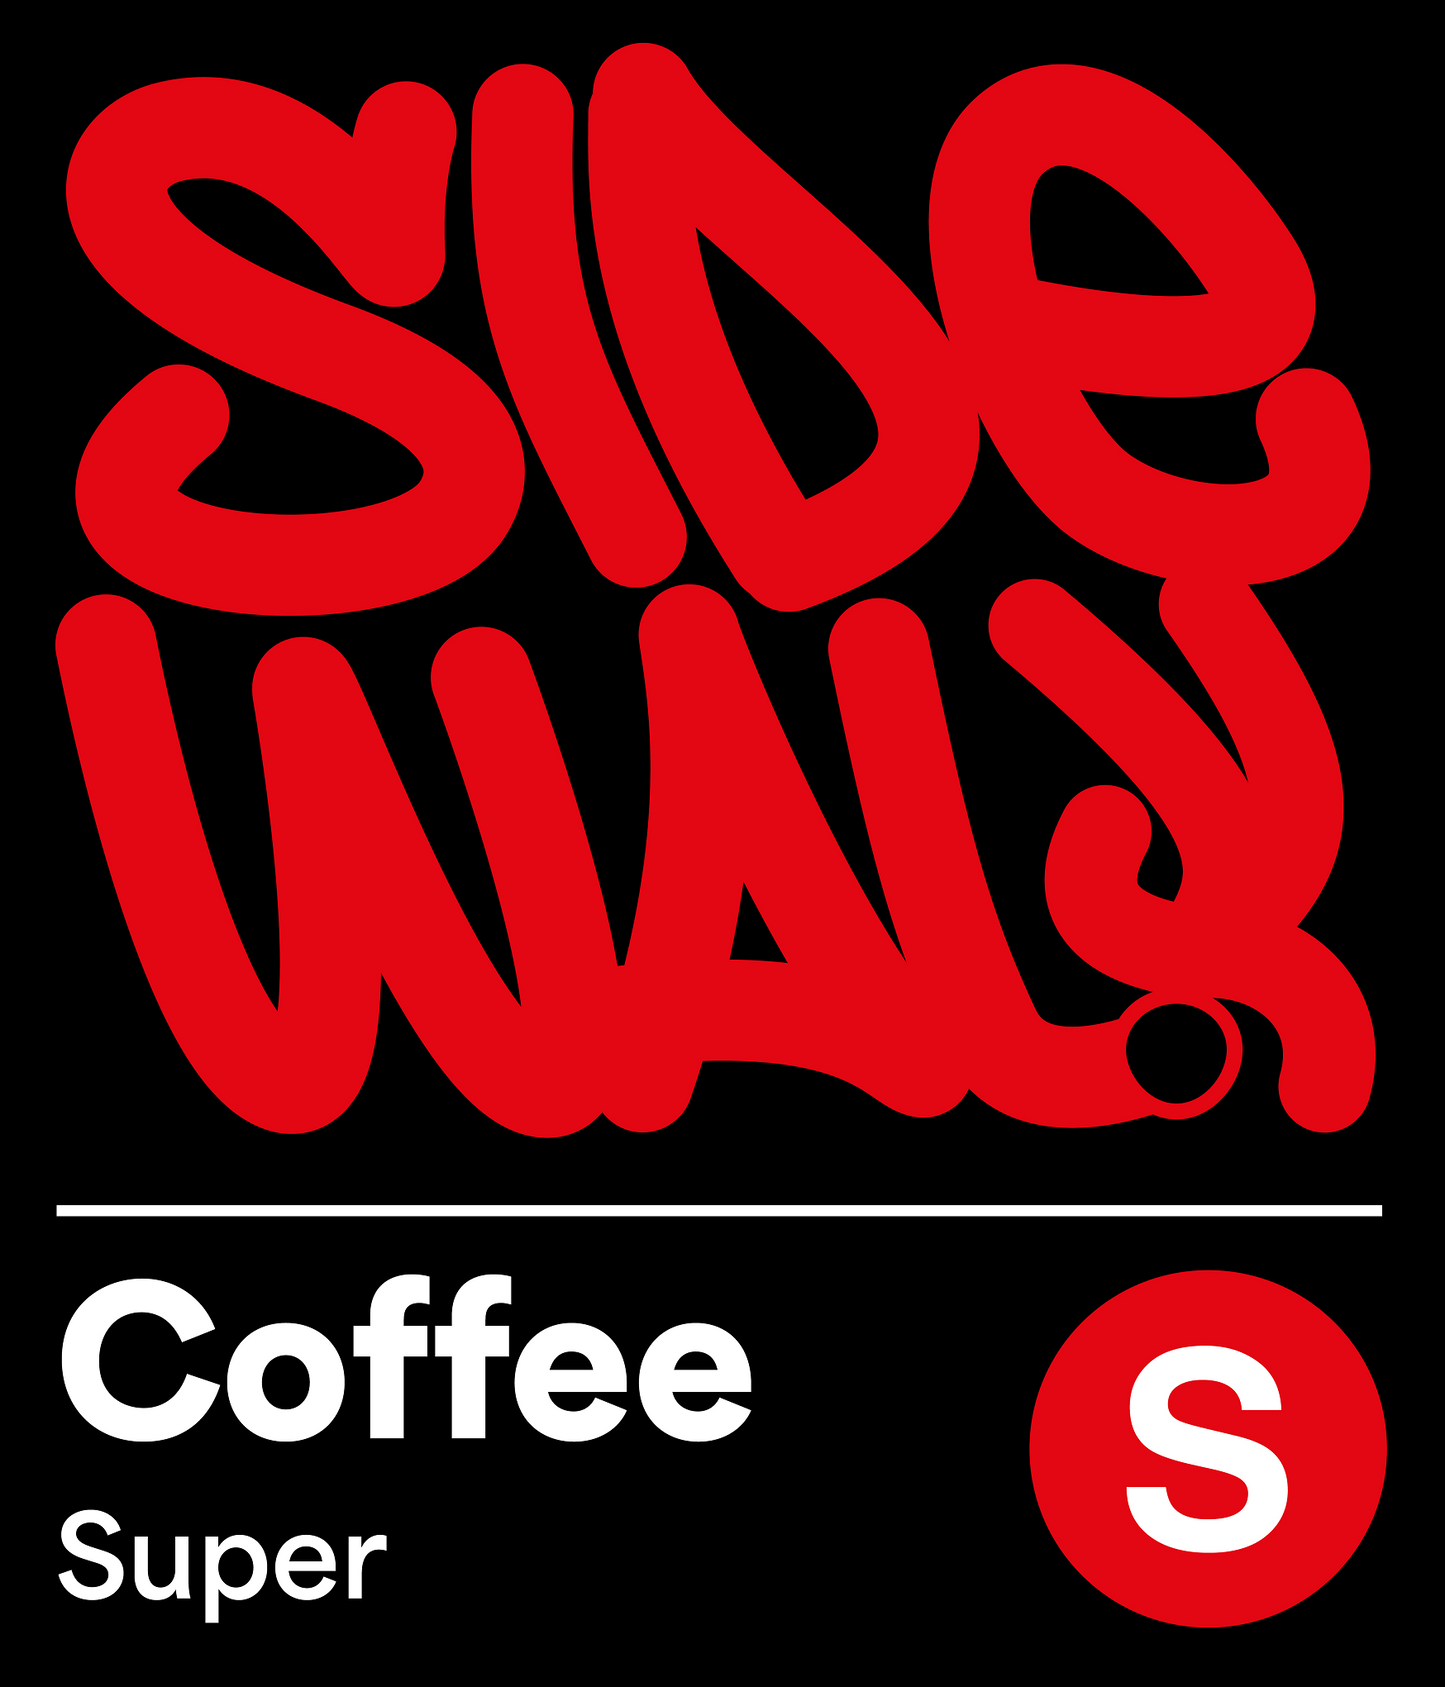 Caffeine Hit - Super strength coffee for Superhumans